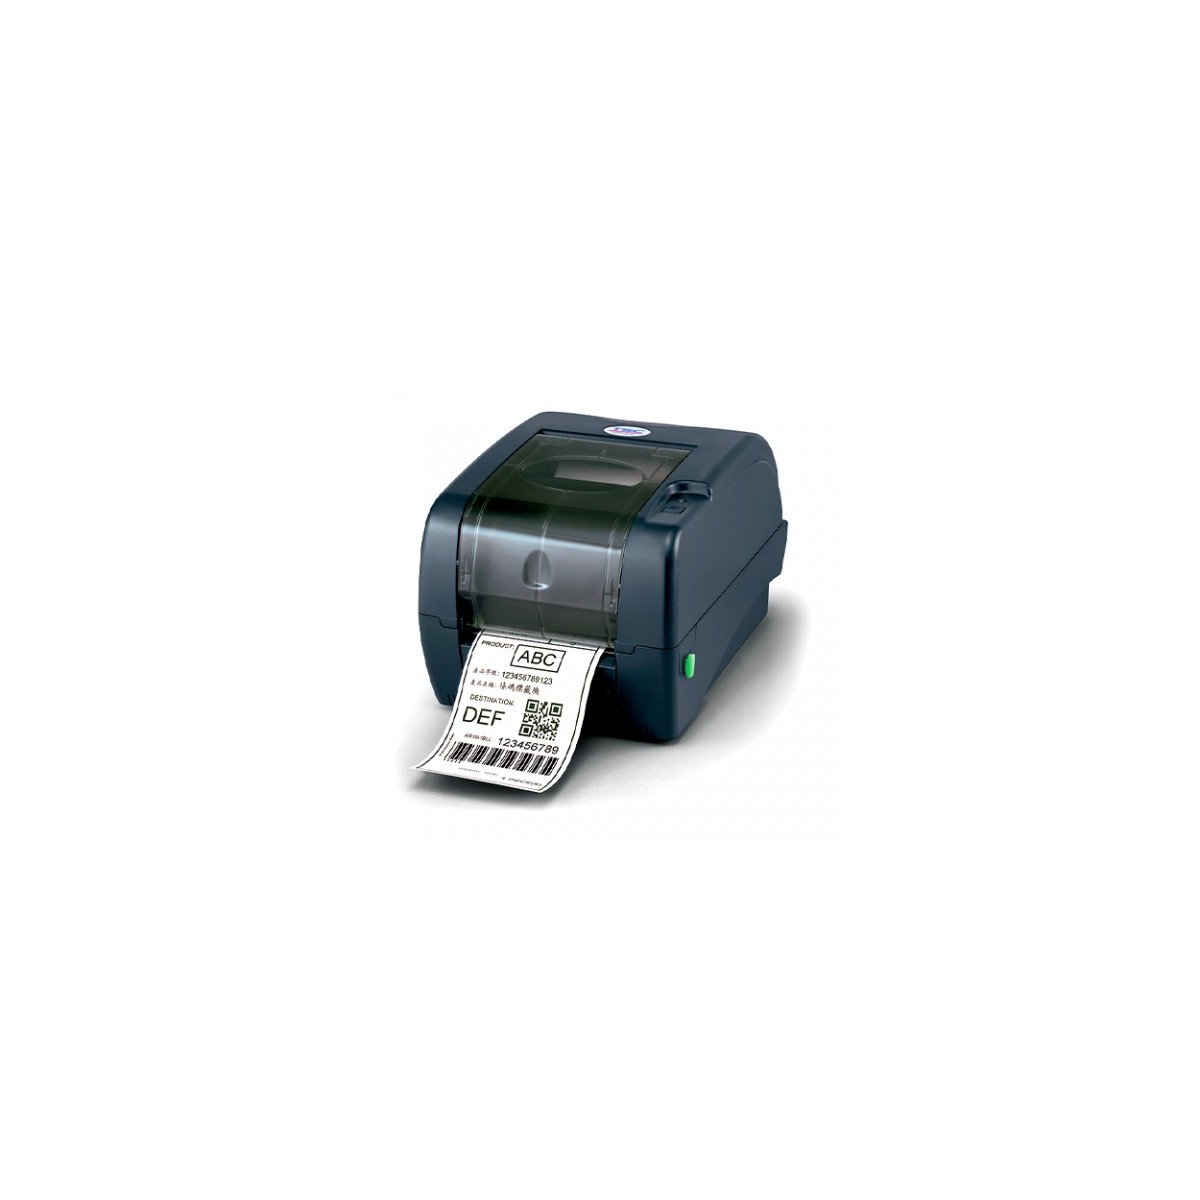 TSC TTP-345 300dpi Multi-IF - Label Printer - Label Printer